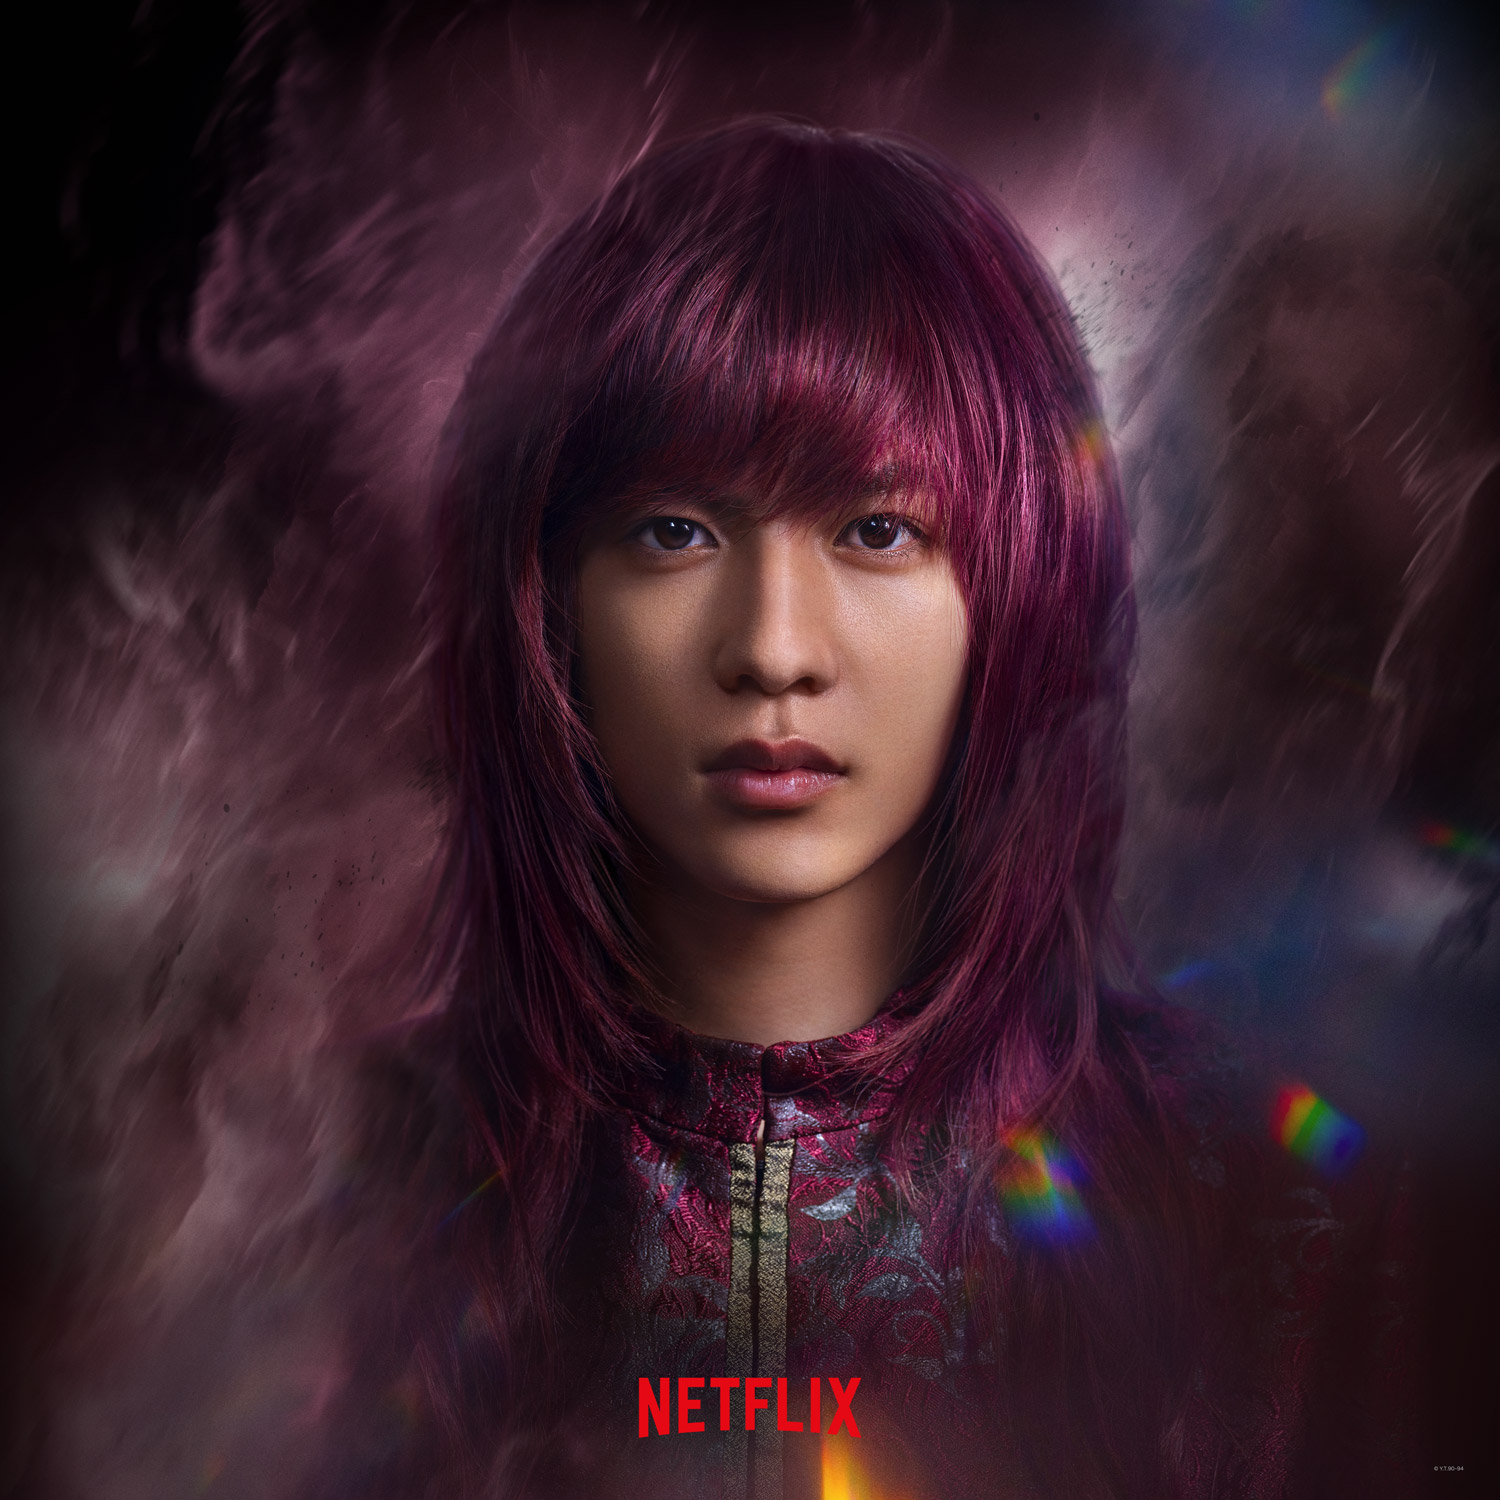 Yu Yu Hakusho adaptation Netflix